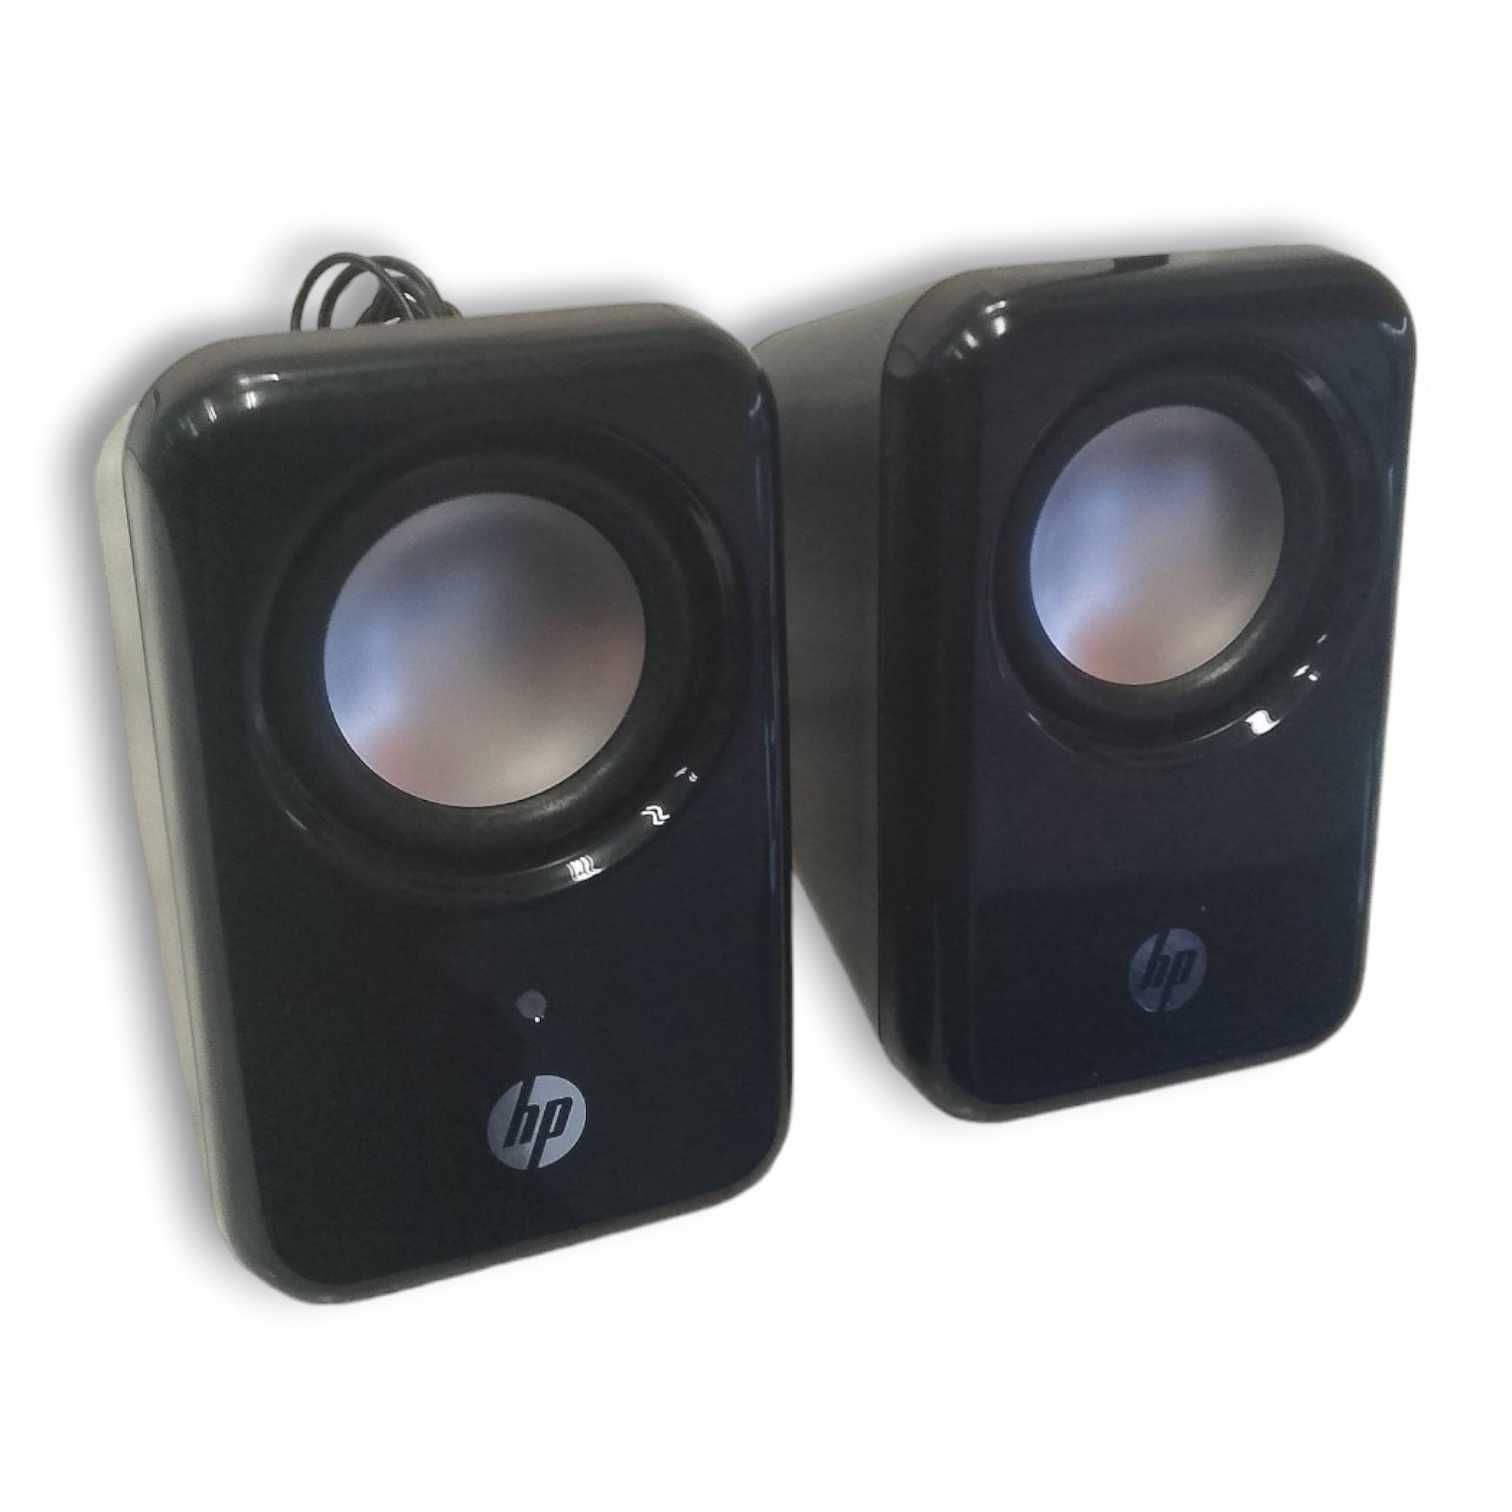 Głośniki HP Multimedia Speakers 2.0